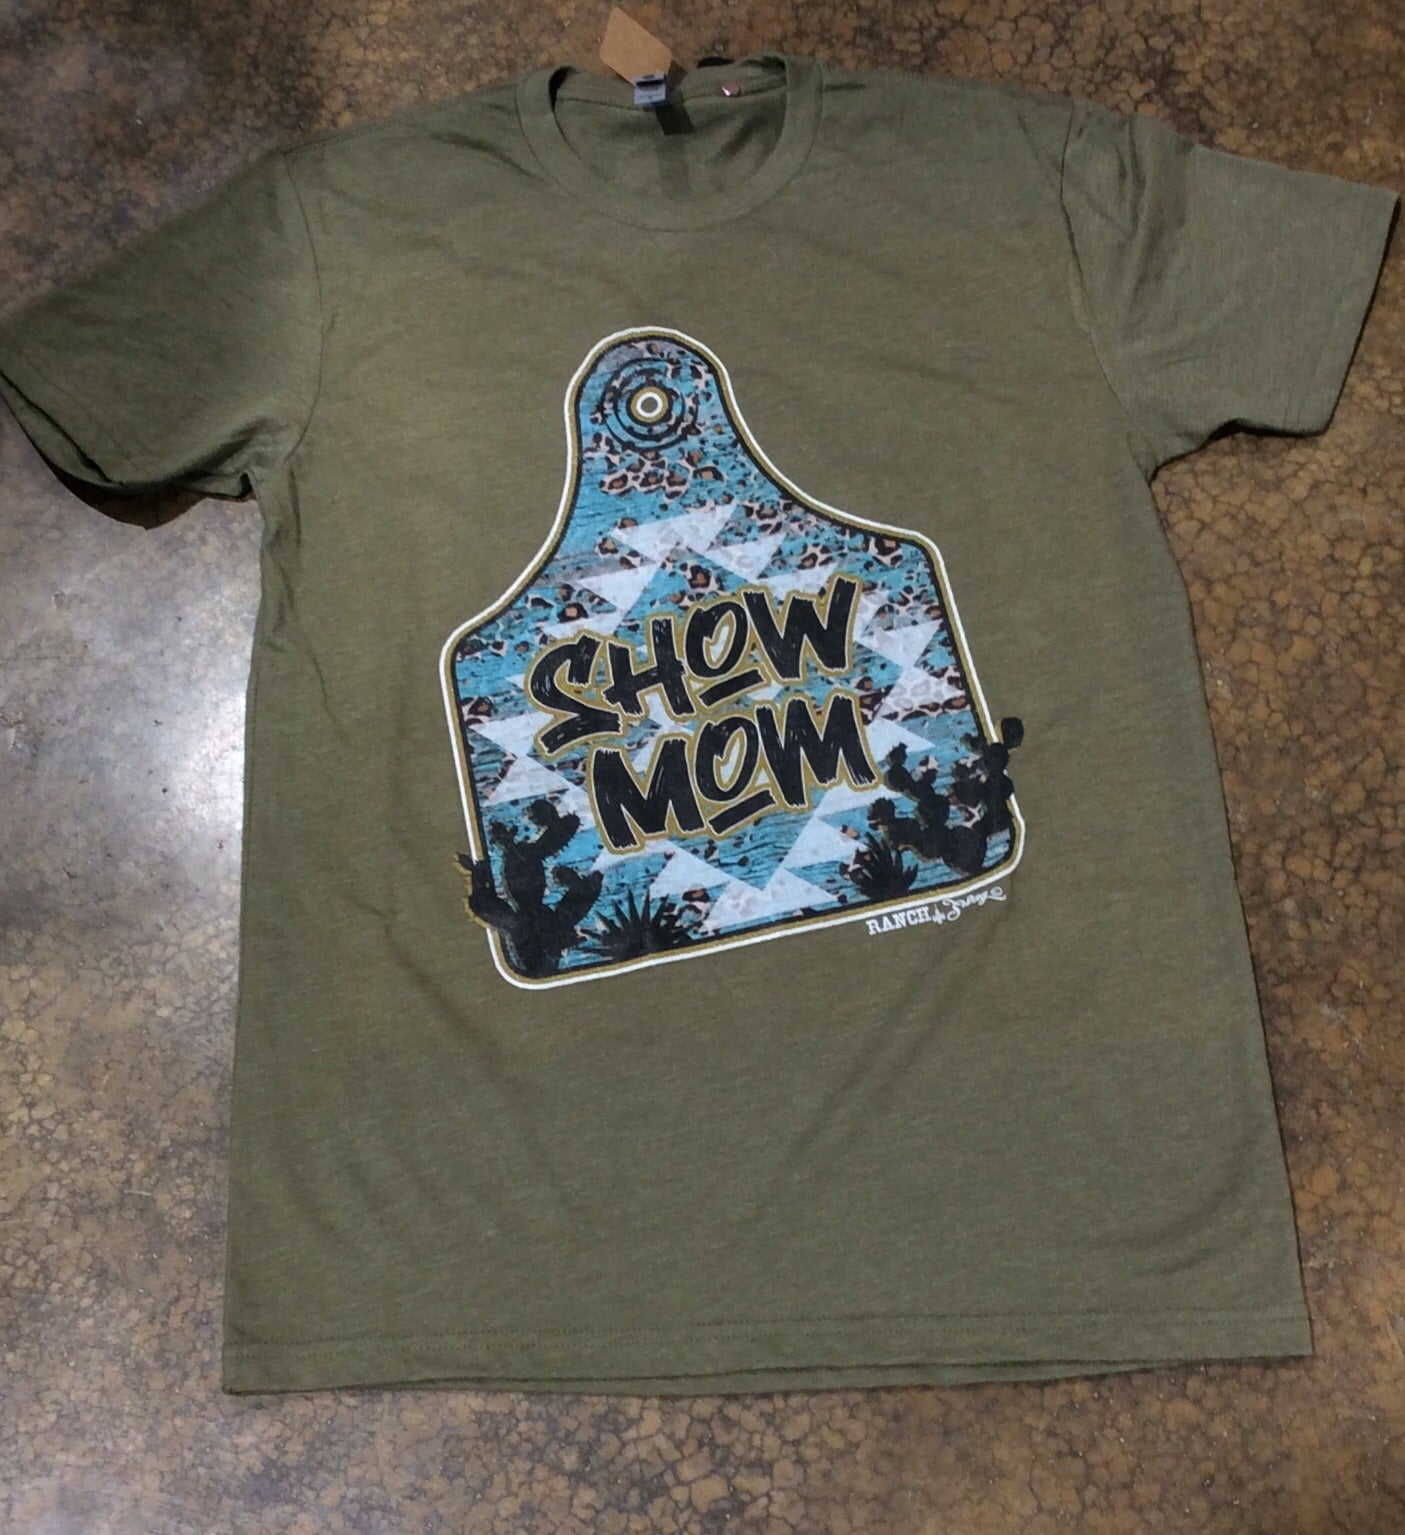 Show Mom Tee Shirt